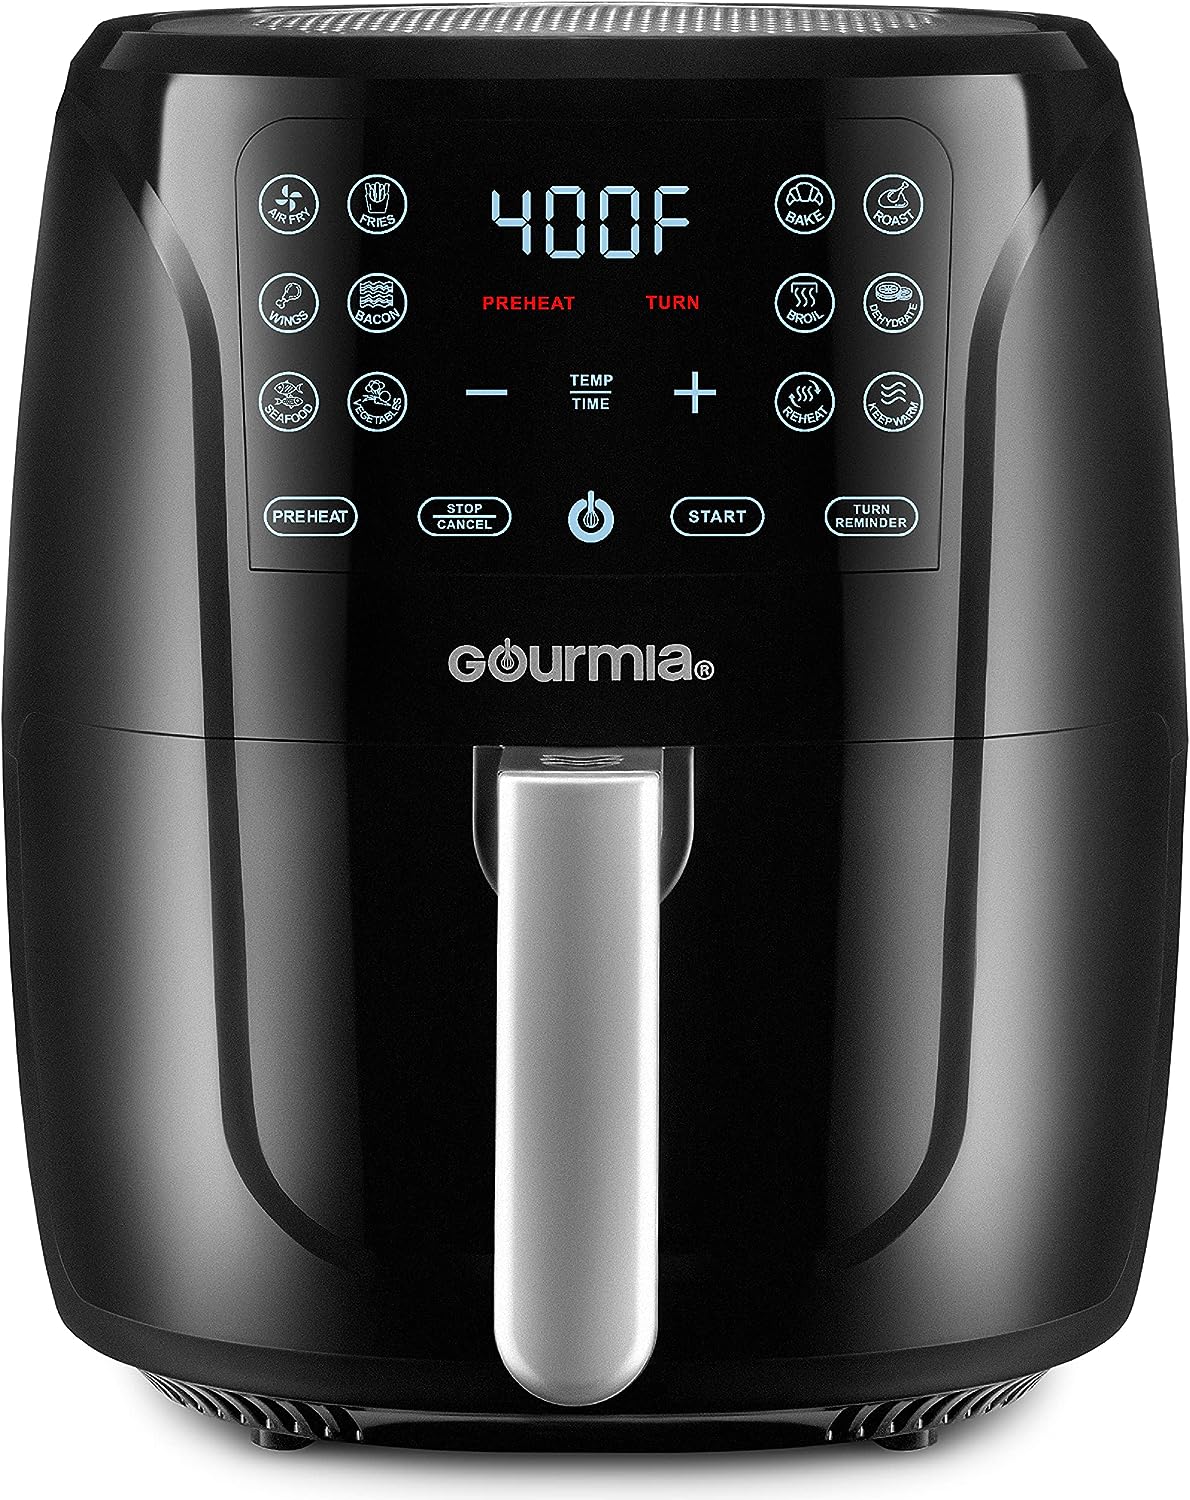 Gourmia Air Fryer Oven Review